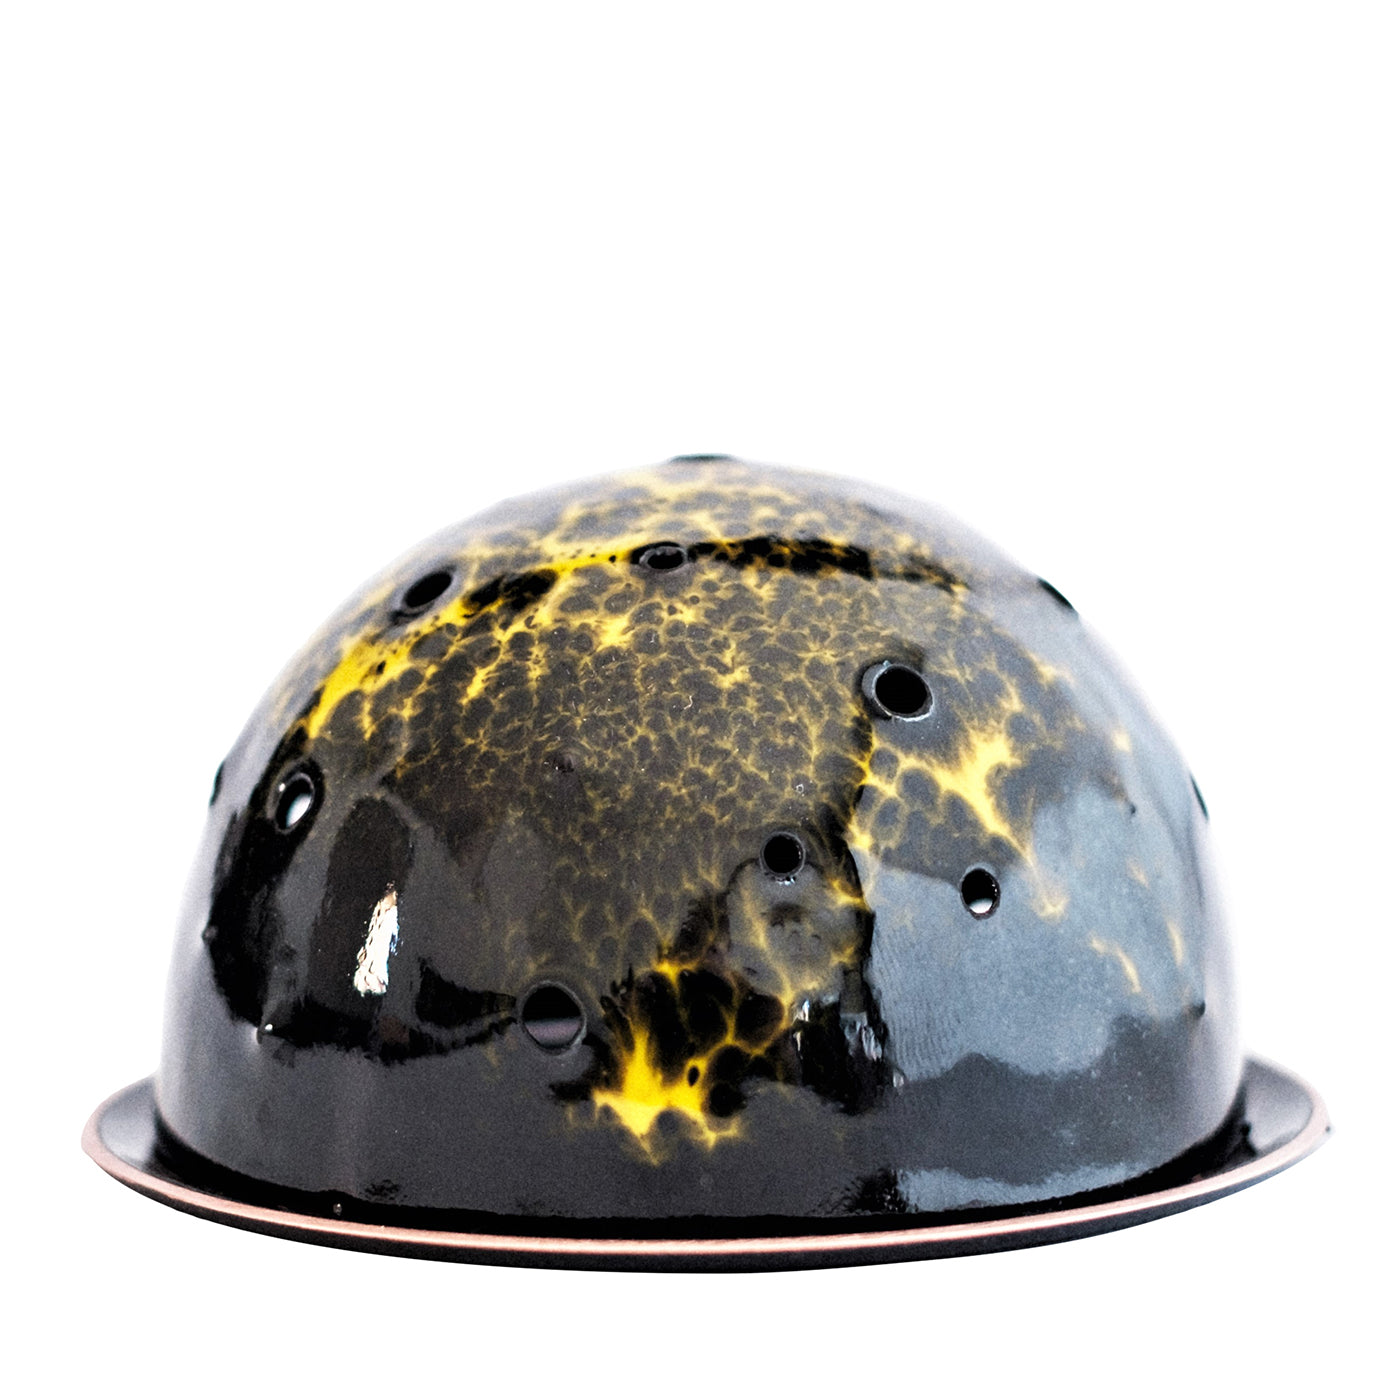 Little Dome Pierced Black&Yellow Incense Diffuser - Main view